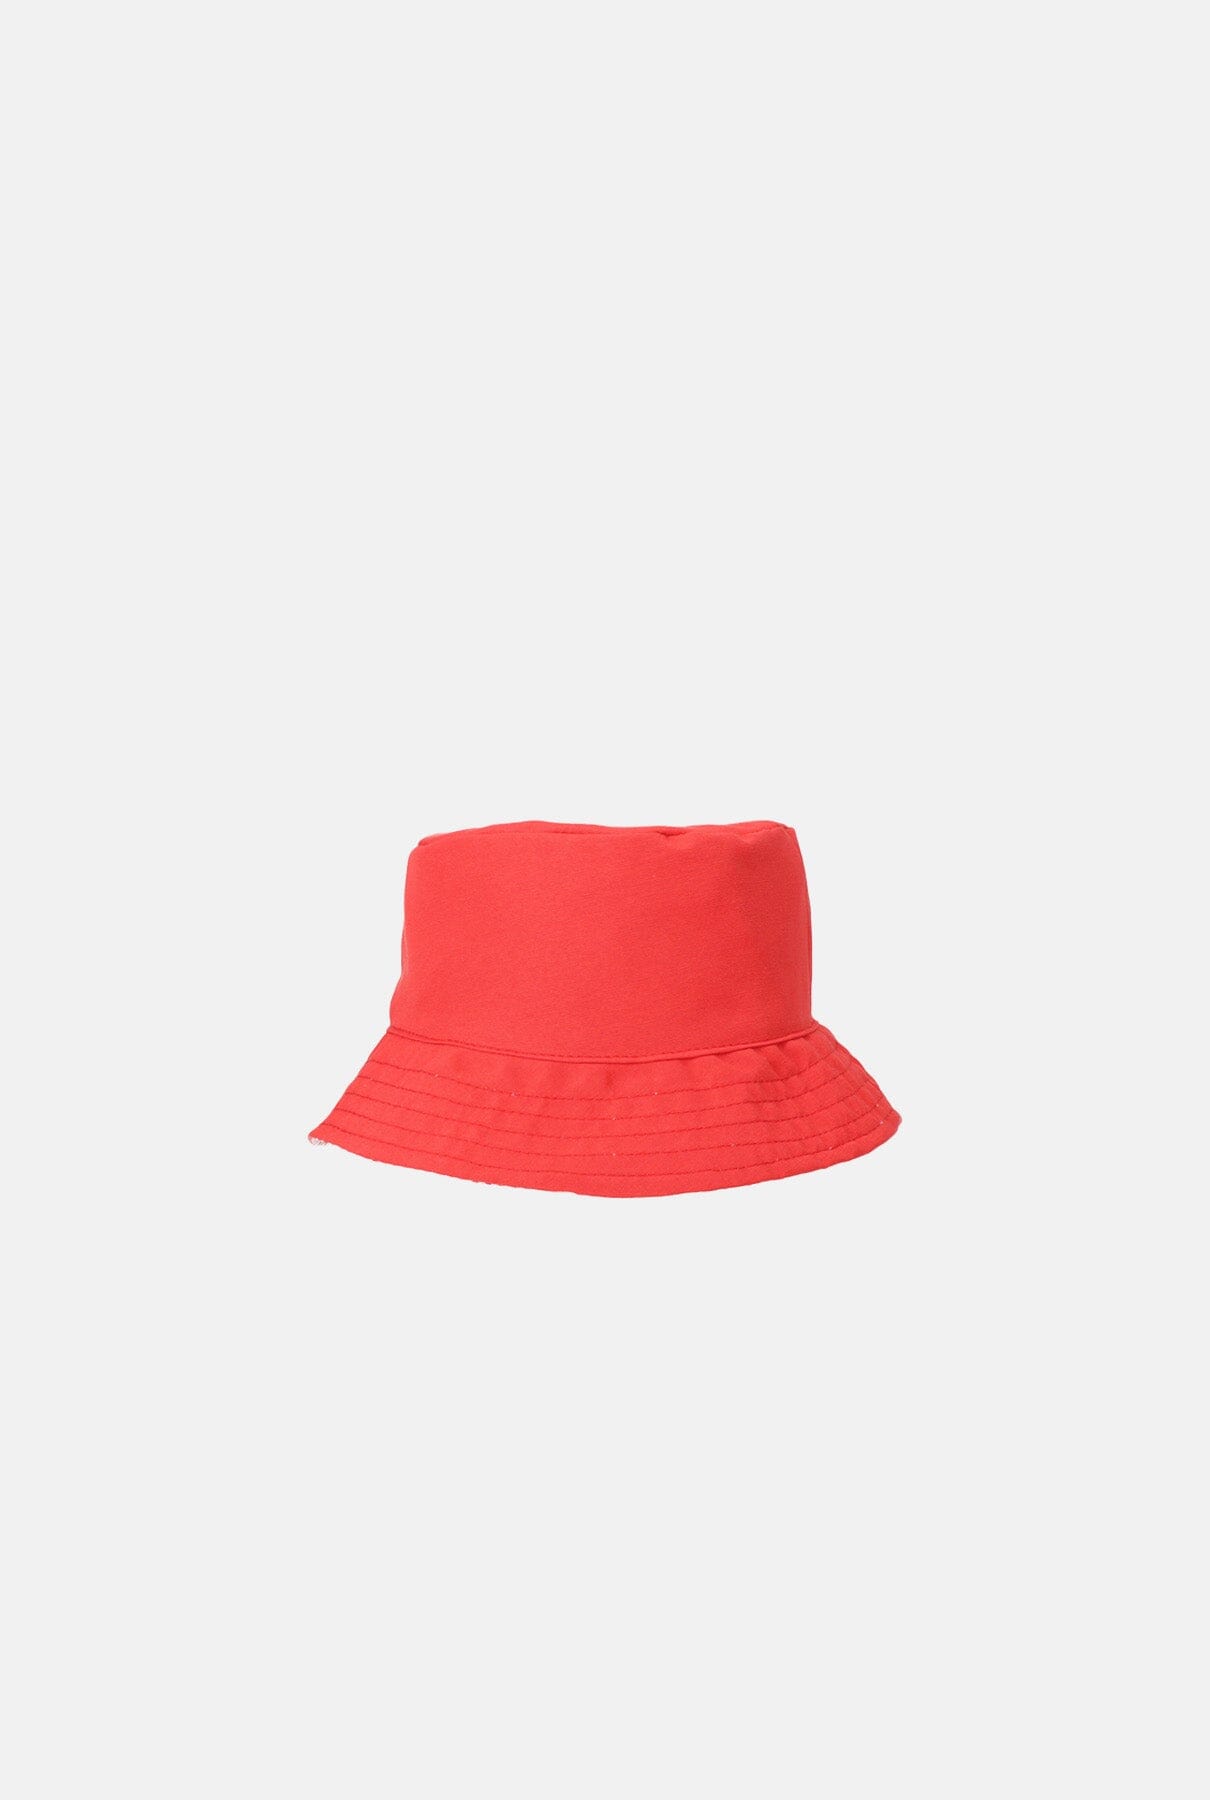 Reversible bicolour red-orange hat Hats Gakomi 